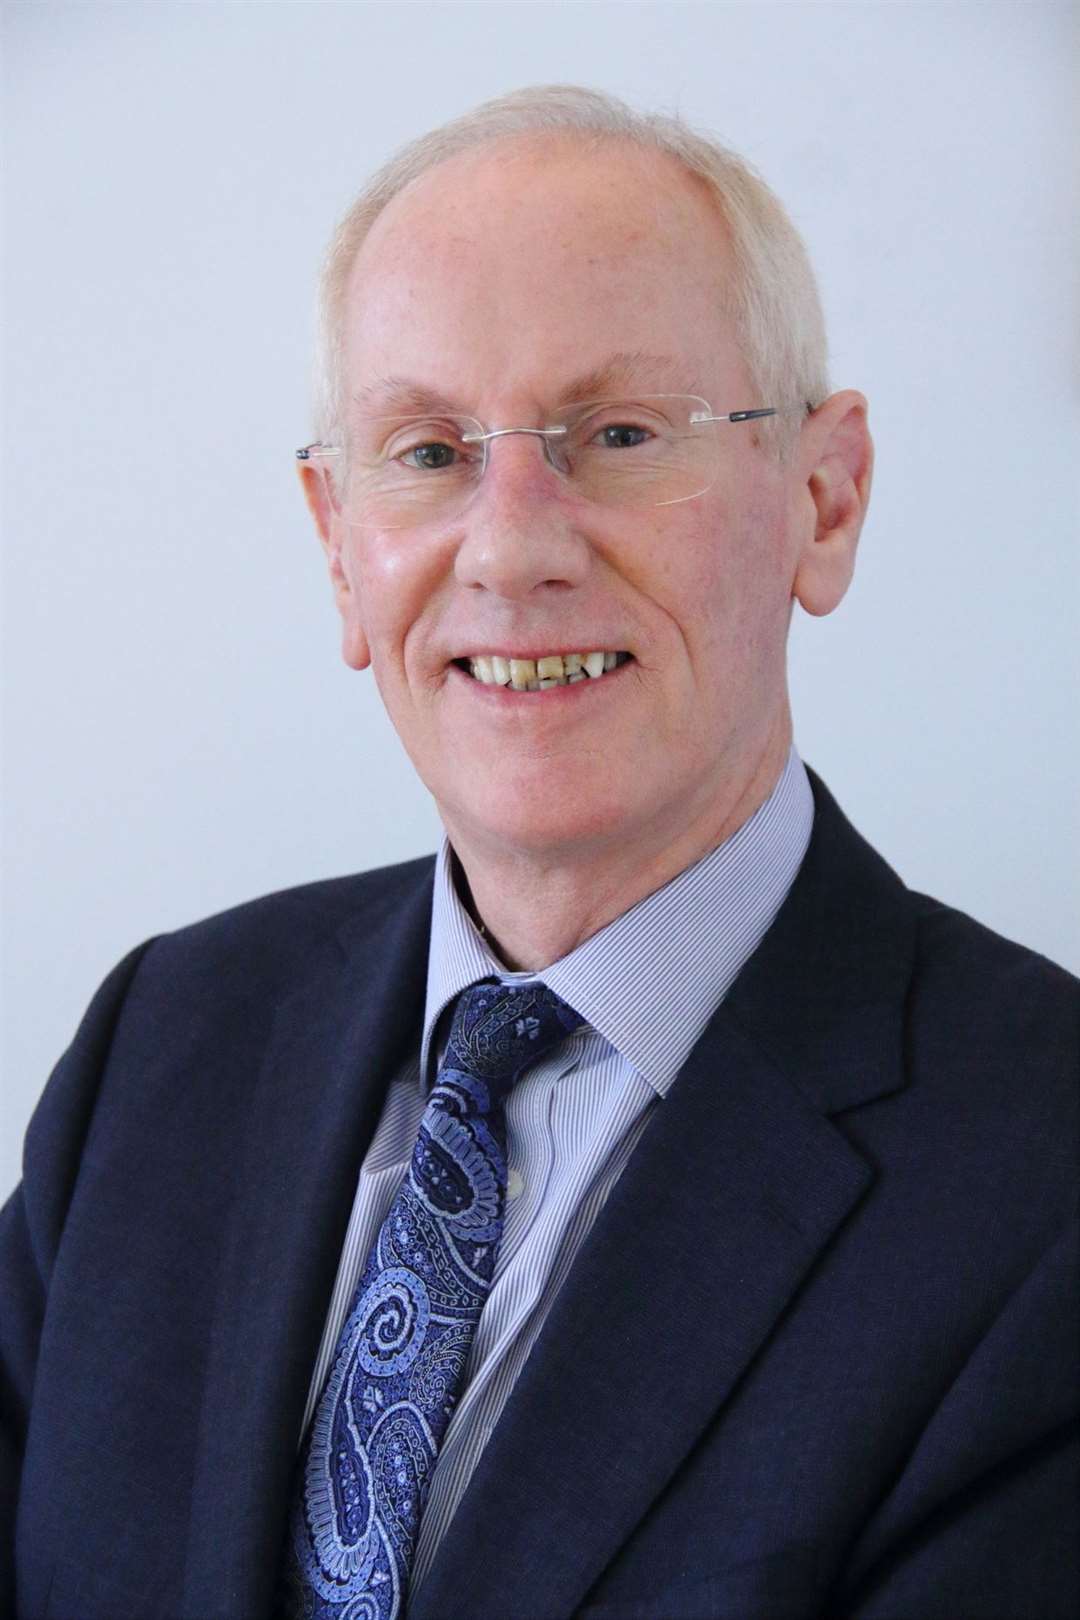 David Hughes from Gravesham Borough Council